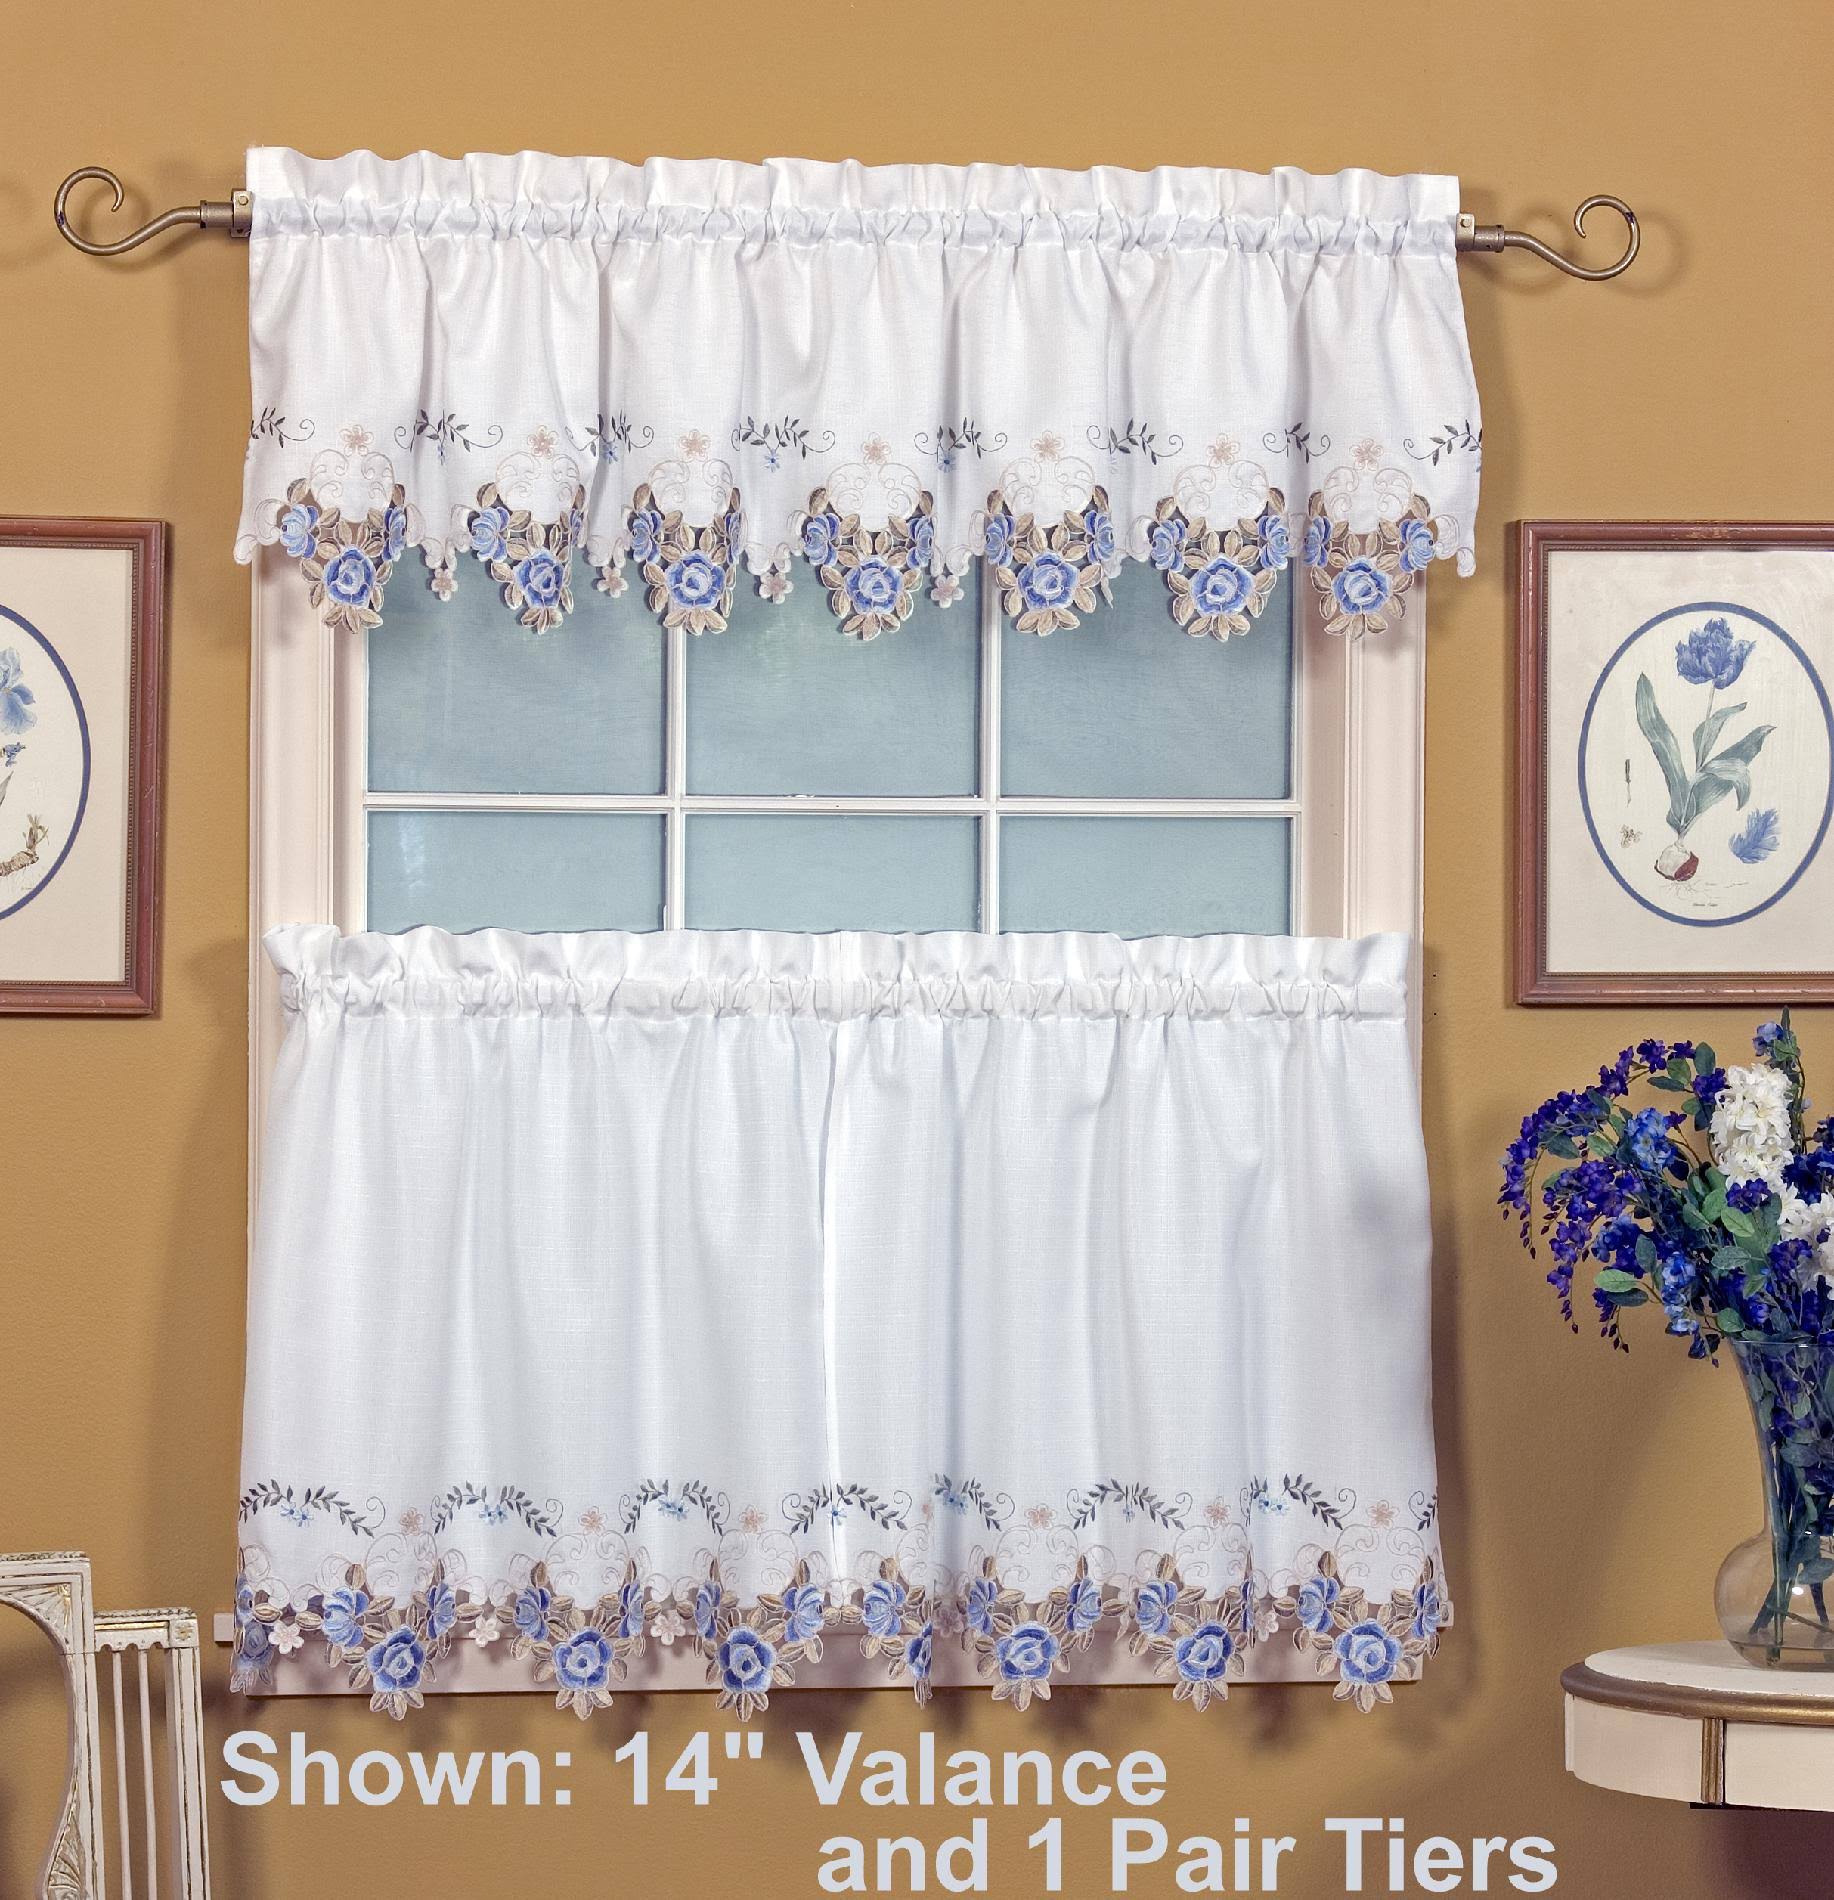 Today's Curtain Verona Reverse Embroidery Tailored Valance - Ecru/Antique